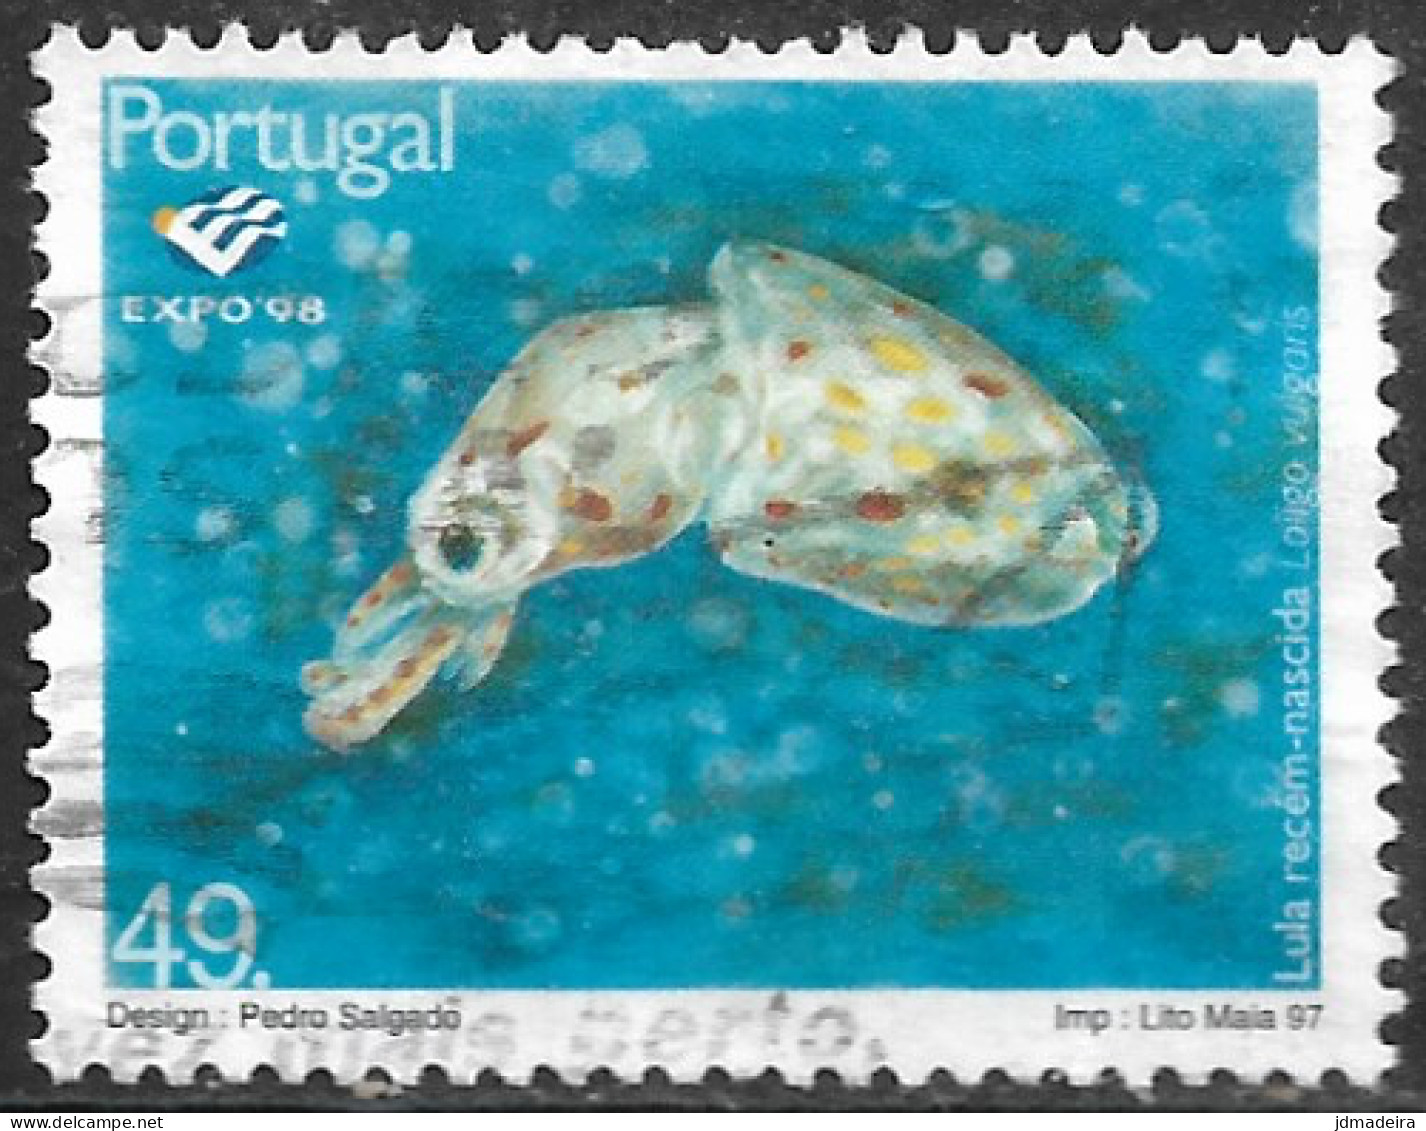 Portugal – 1997 Expo'98 40. Used Stamp - Usati